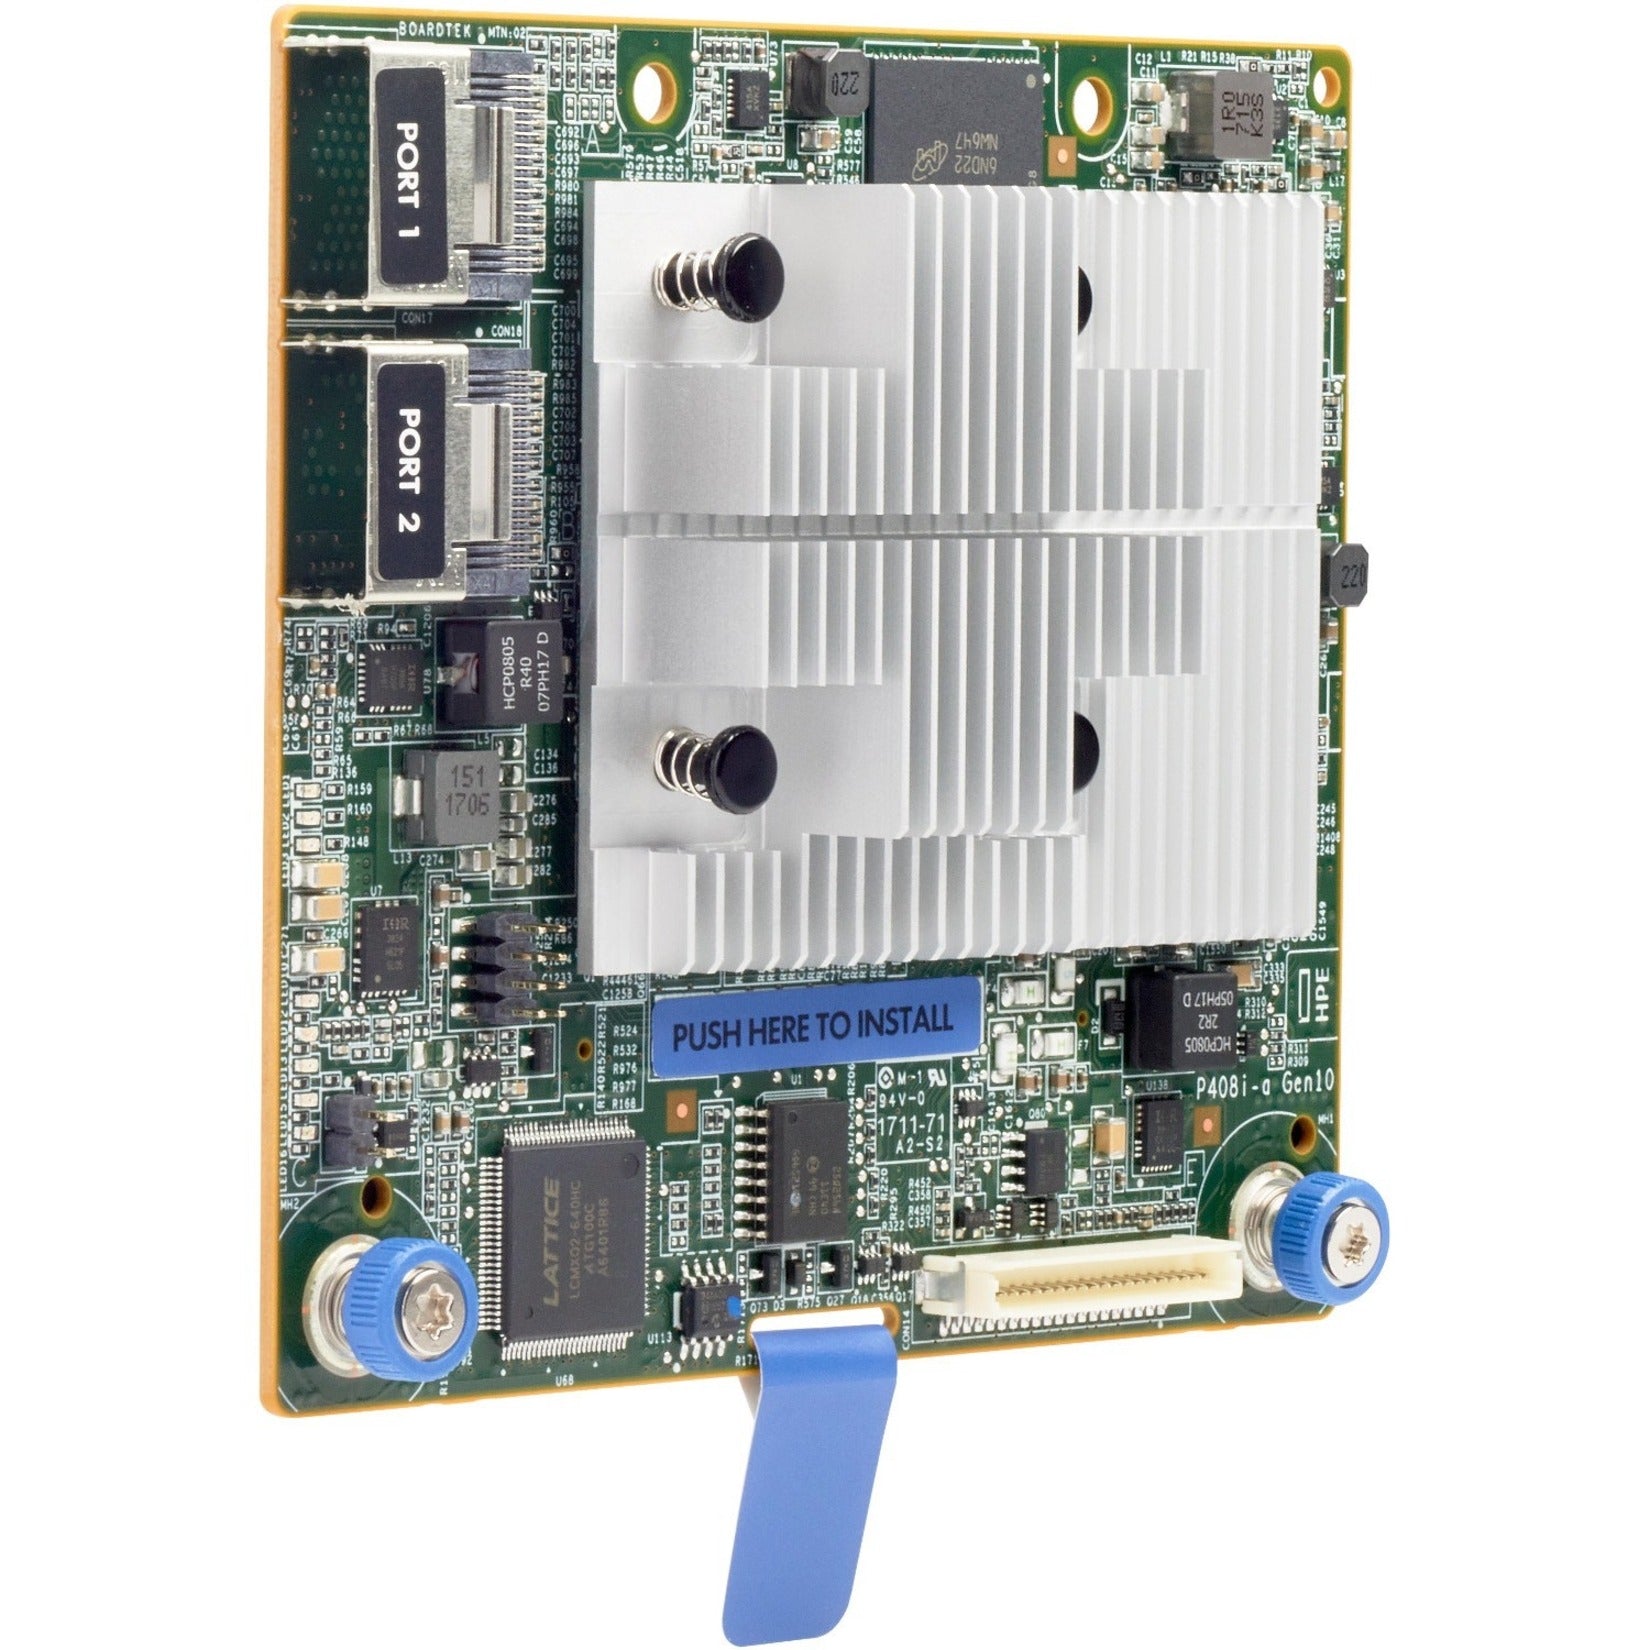 HPE 804331-B21 Smart Array P408i-a SR Gen10 Controller, 2GB Cache Memory, 12Gb/s SAS, PCI Express 3.0 x8